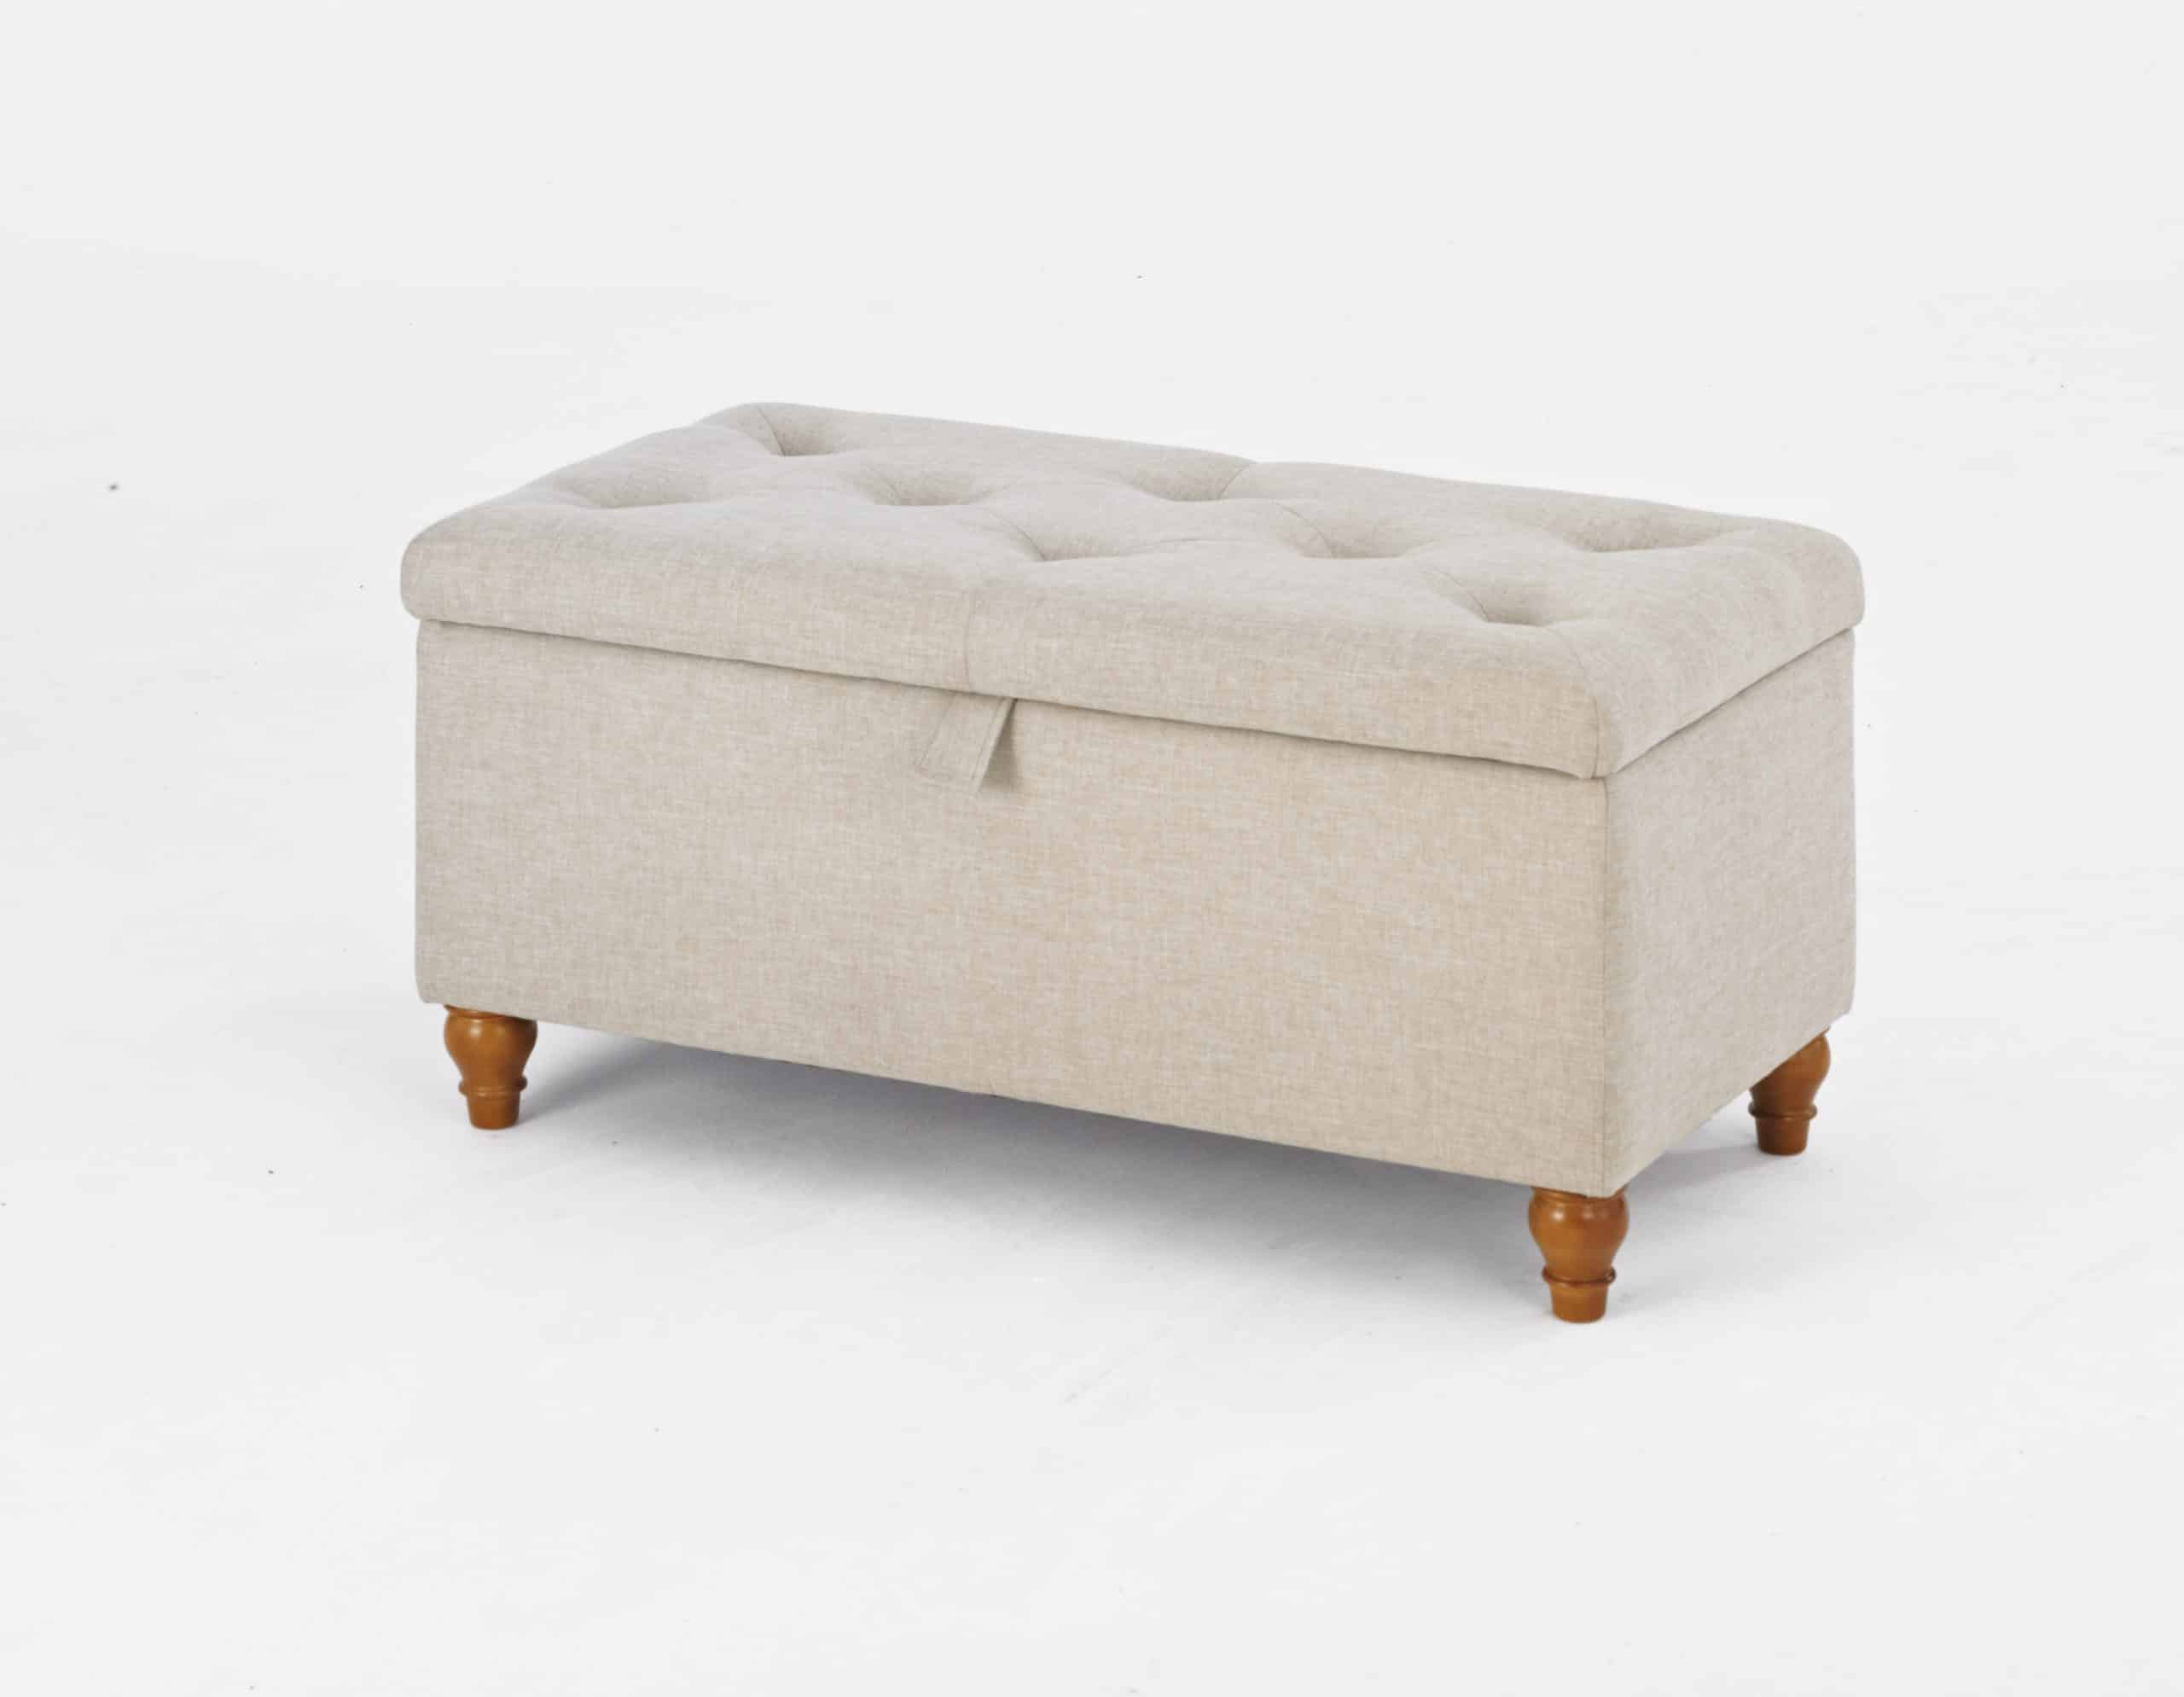 Grey ottoman designed by Hush Bedroom furniture